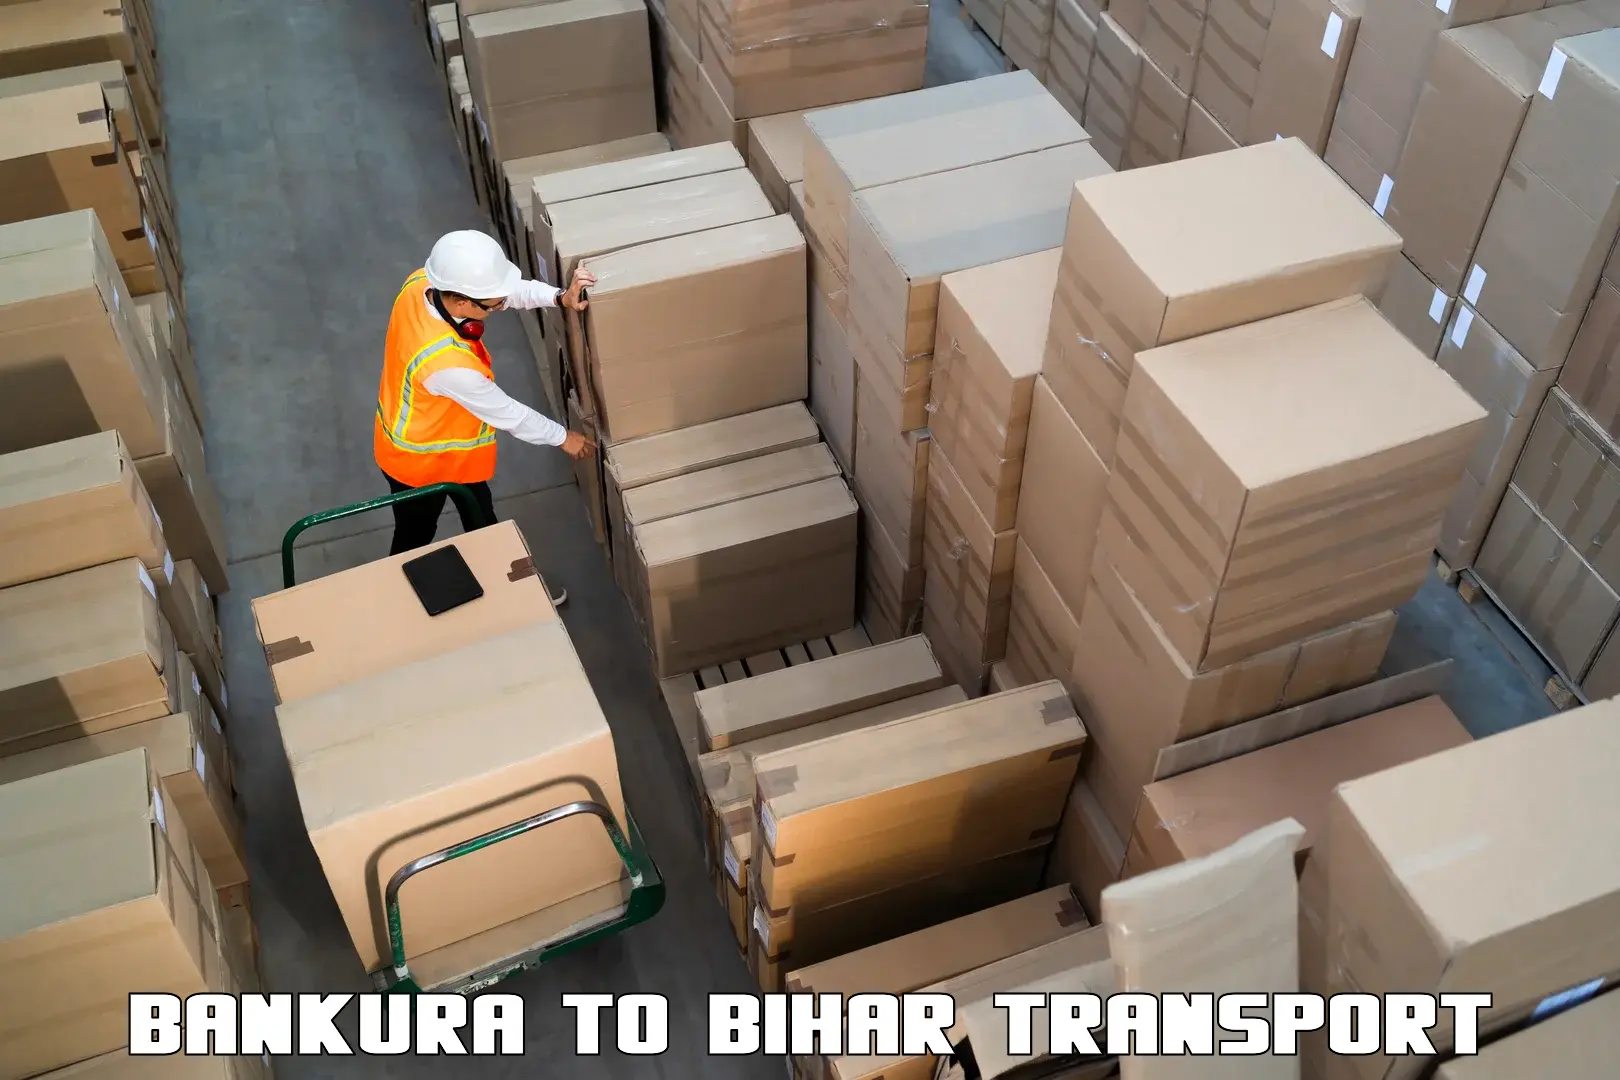 Shipping partner Bankura to Dhaka